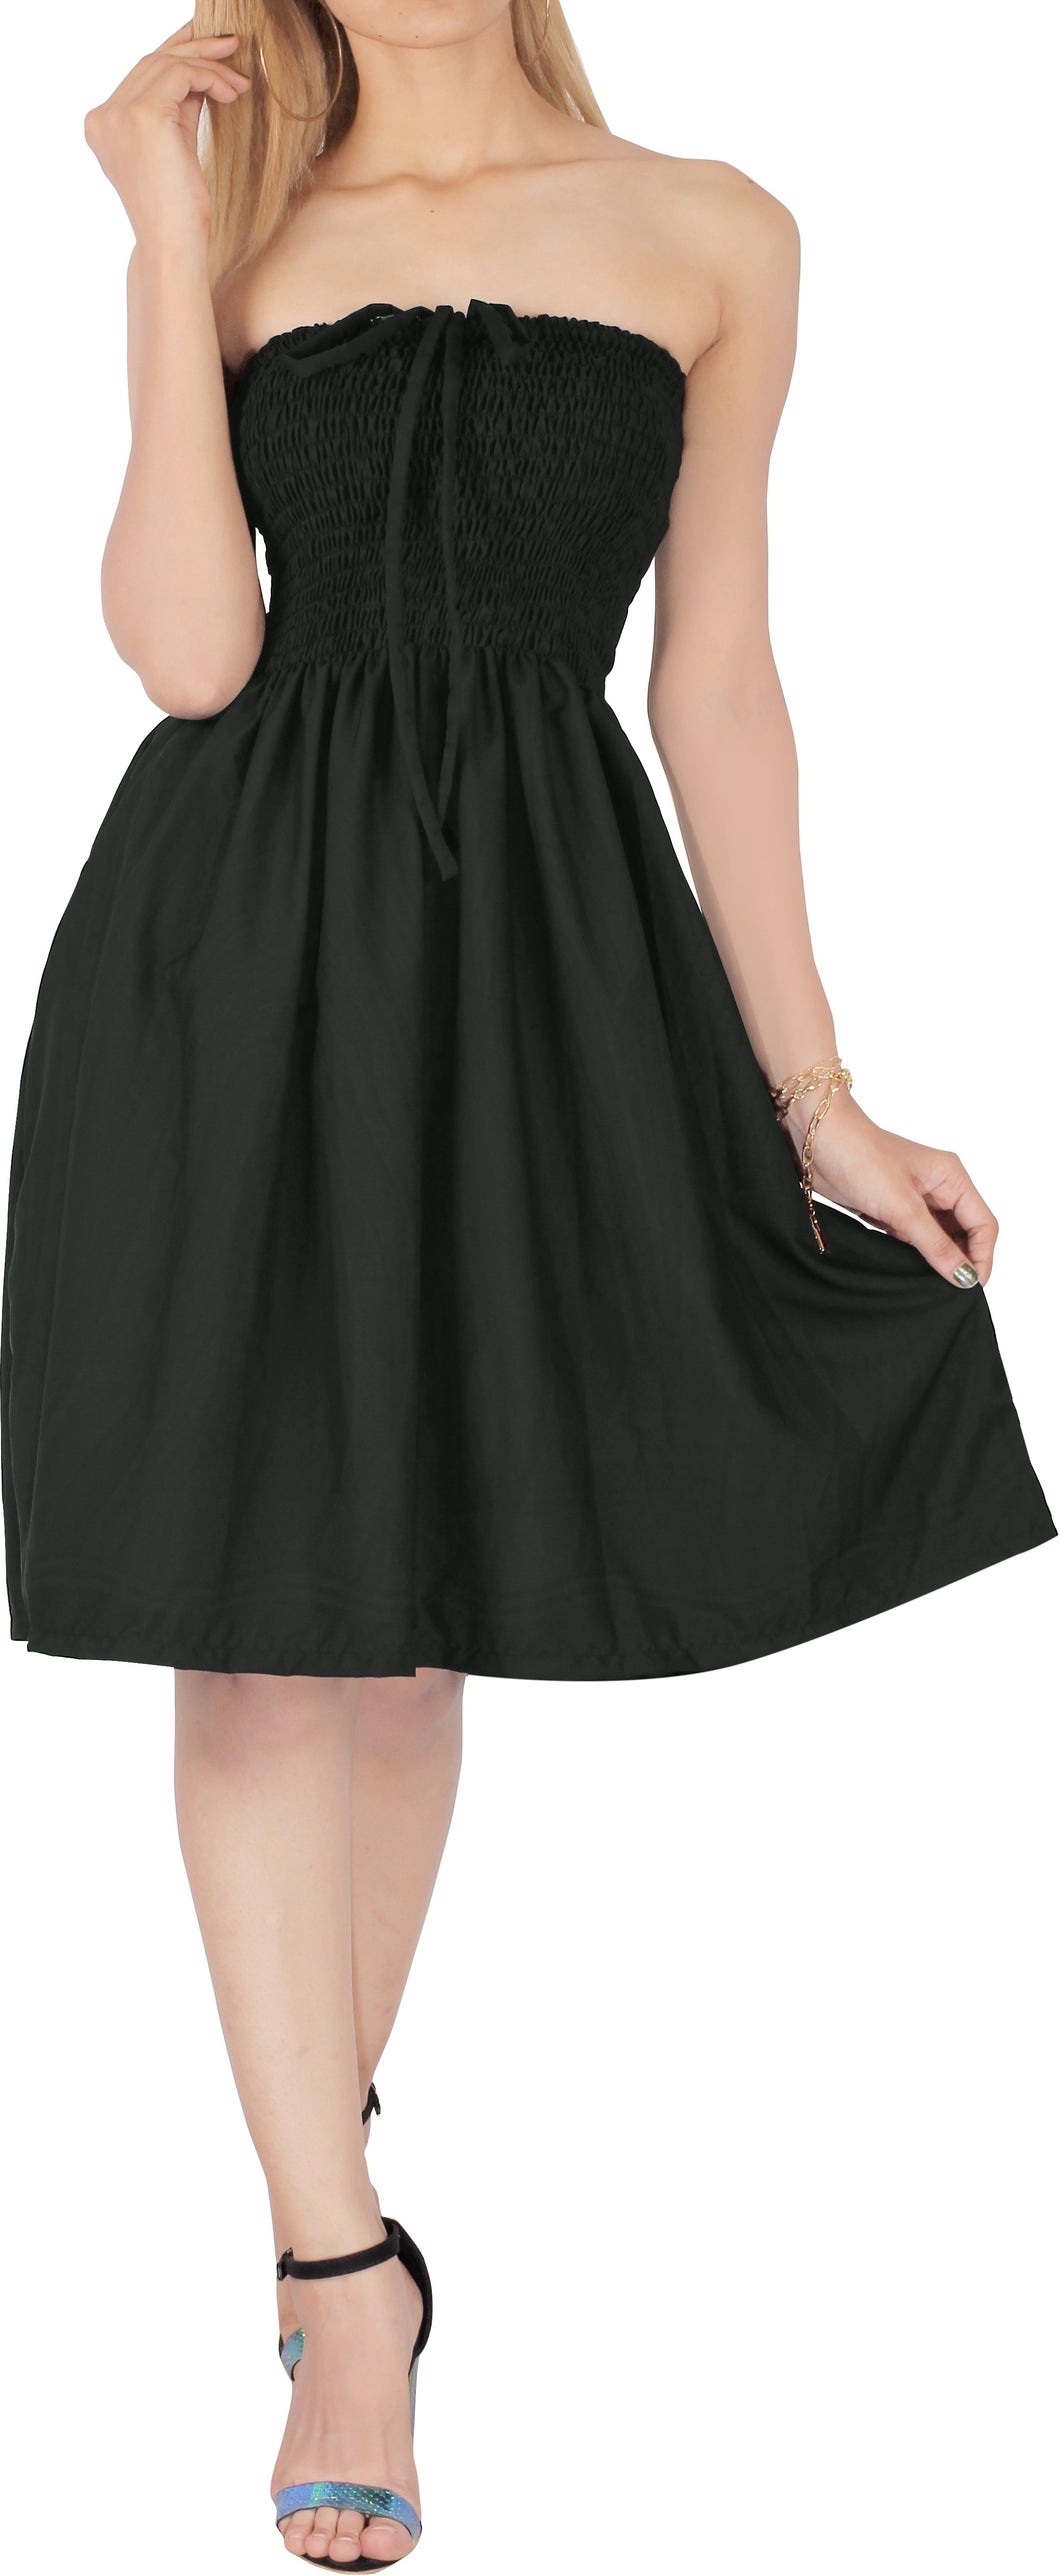 LA LEELA Black Color Tube Dress For Women Female Chic And Casual Swimsuit Swimwear Coverup